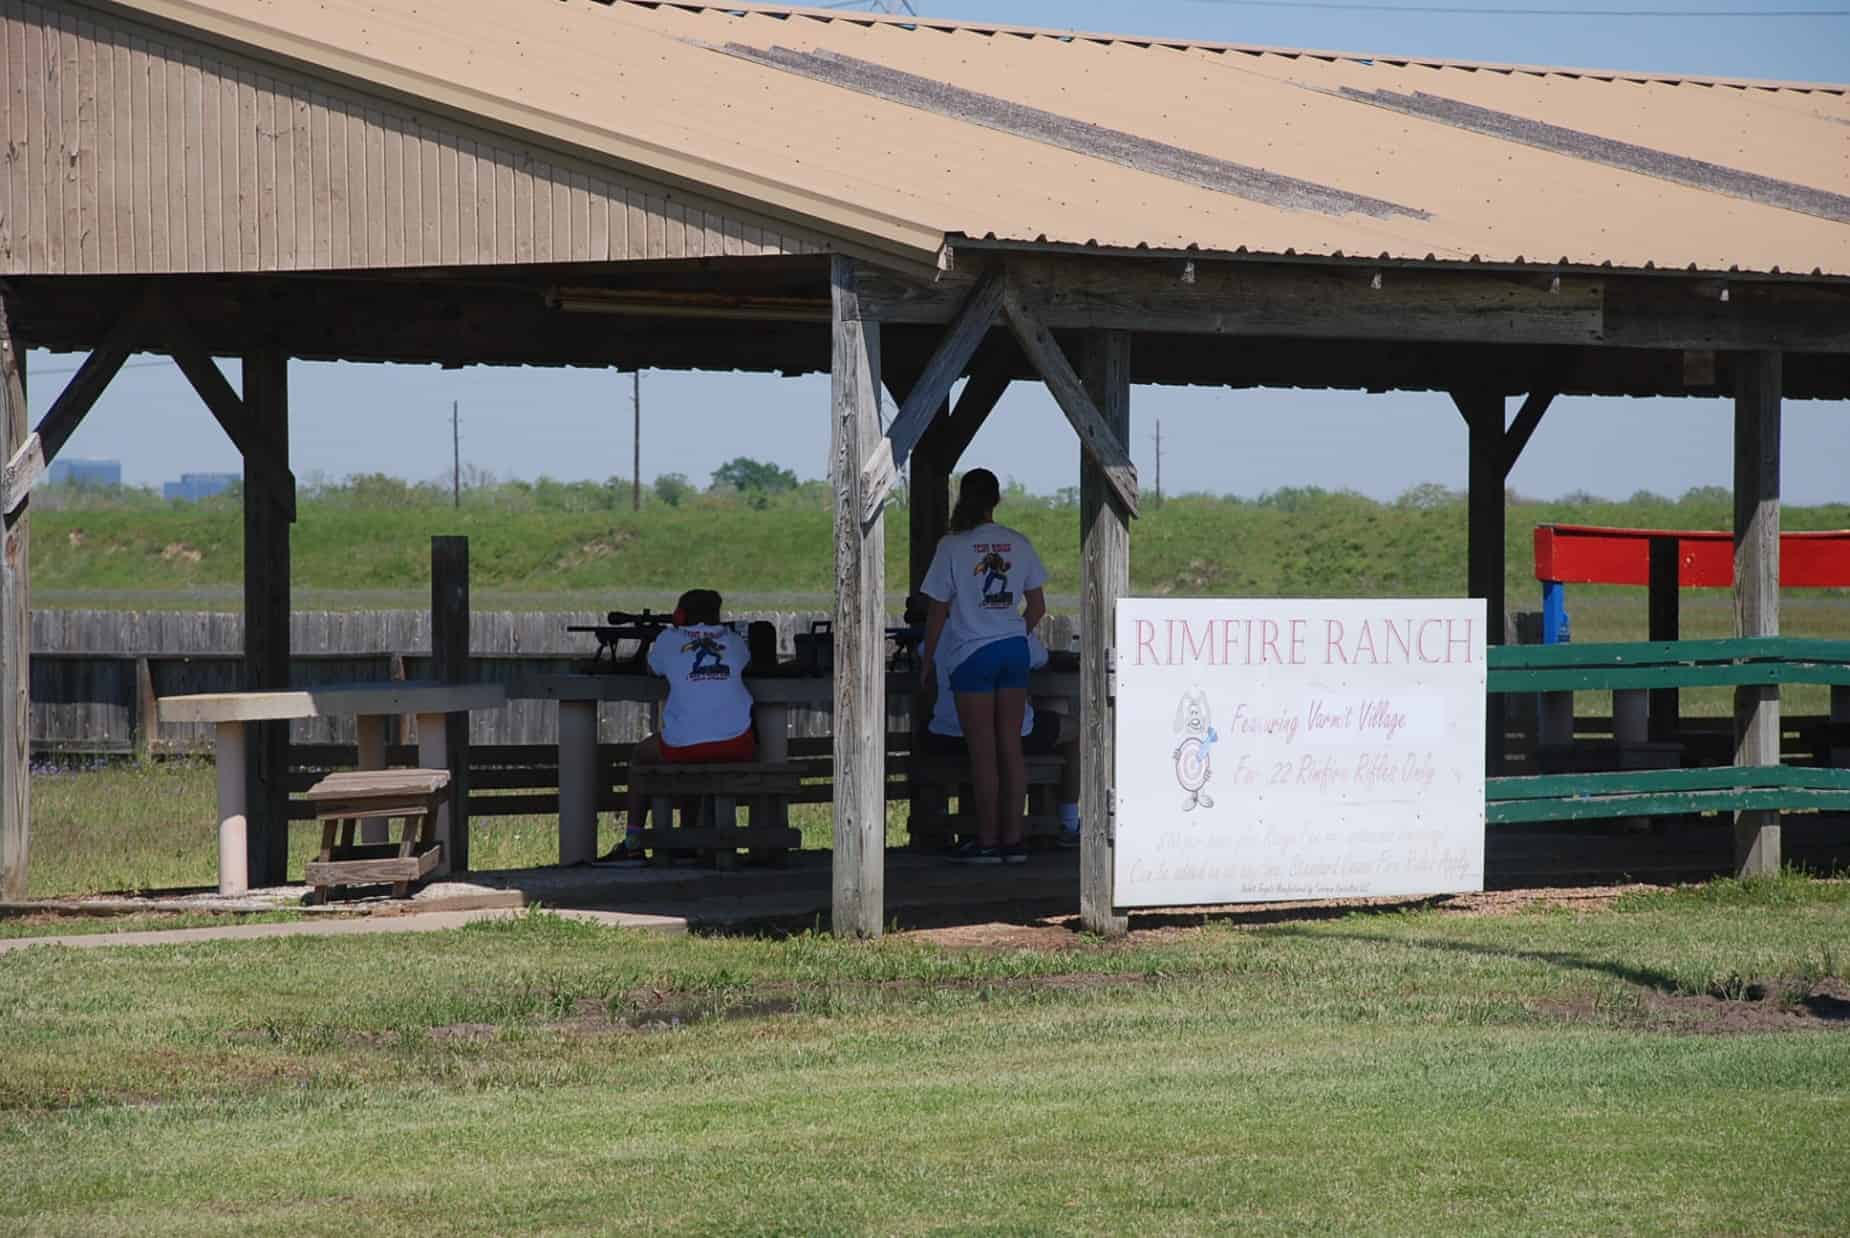 Shooting Range within George Bush Park Houston TX